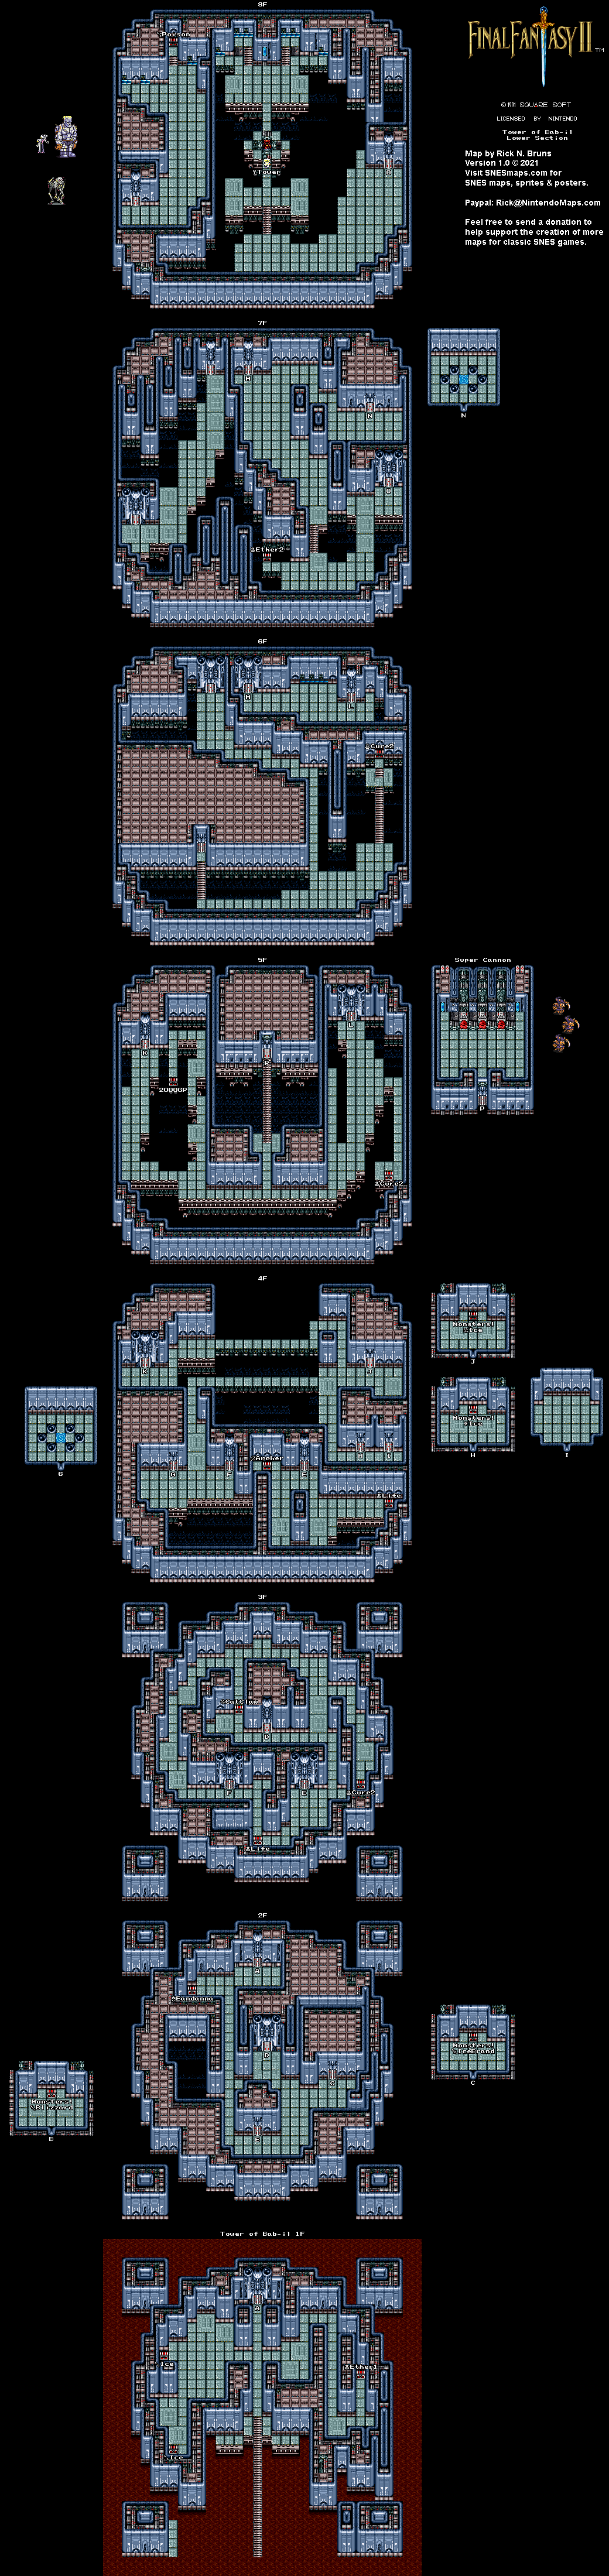 Final Fantasy II 2 (IV 4) - TowerOfBab-il Lower Section Super Nintendo SNES Map